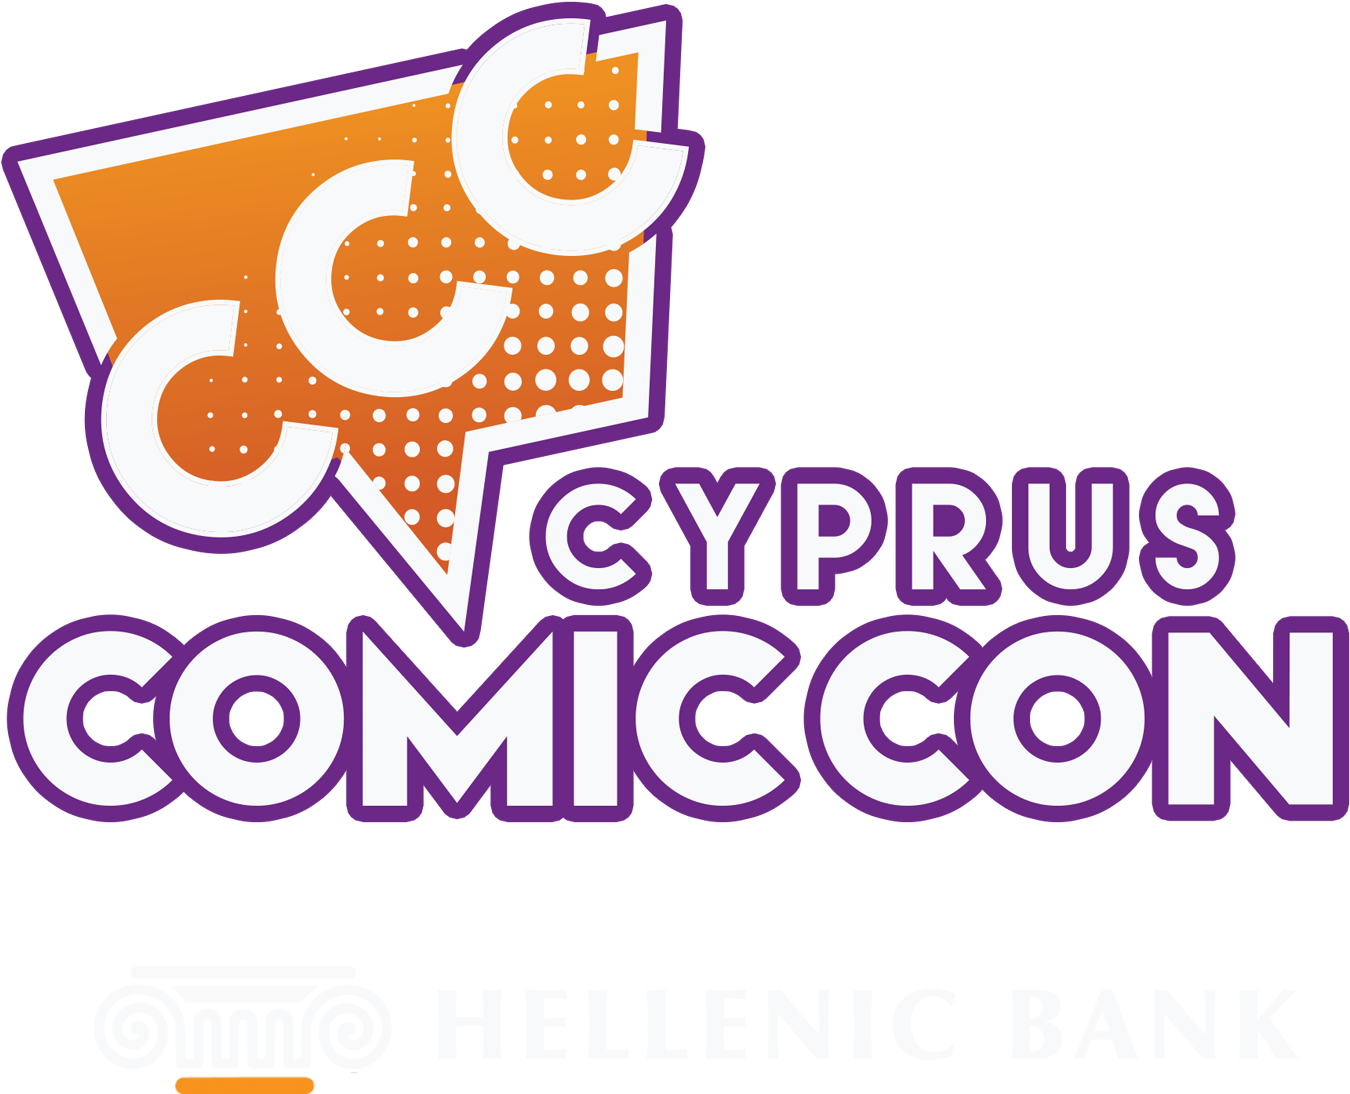 Cyprus Comic Con Logo PNG image